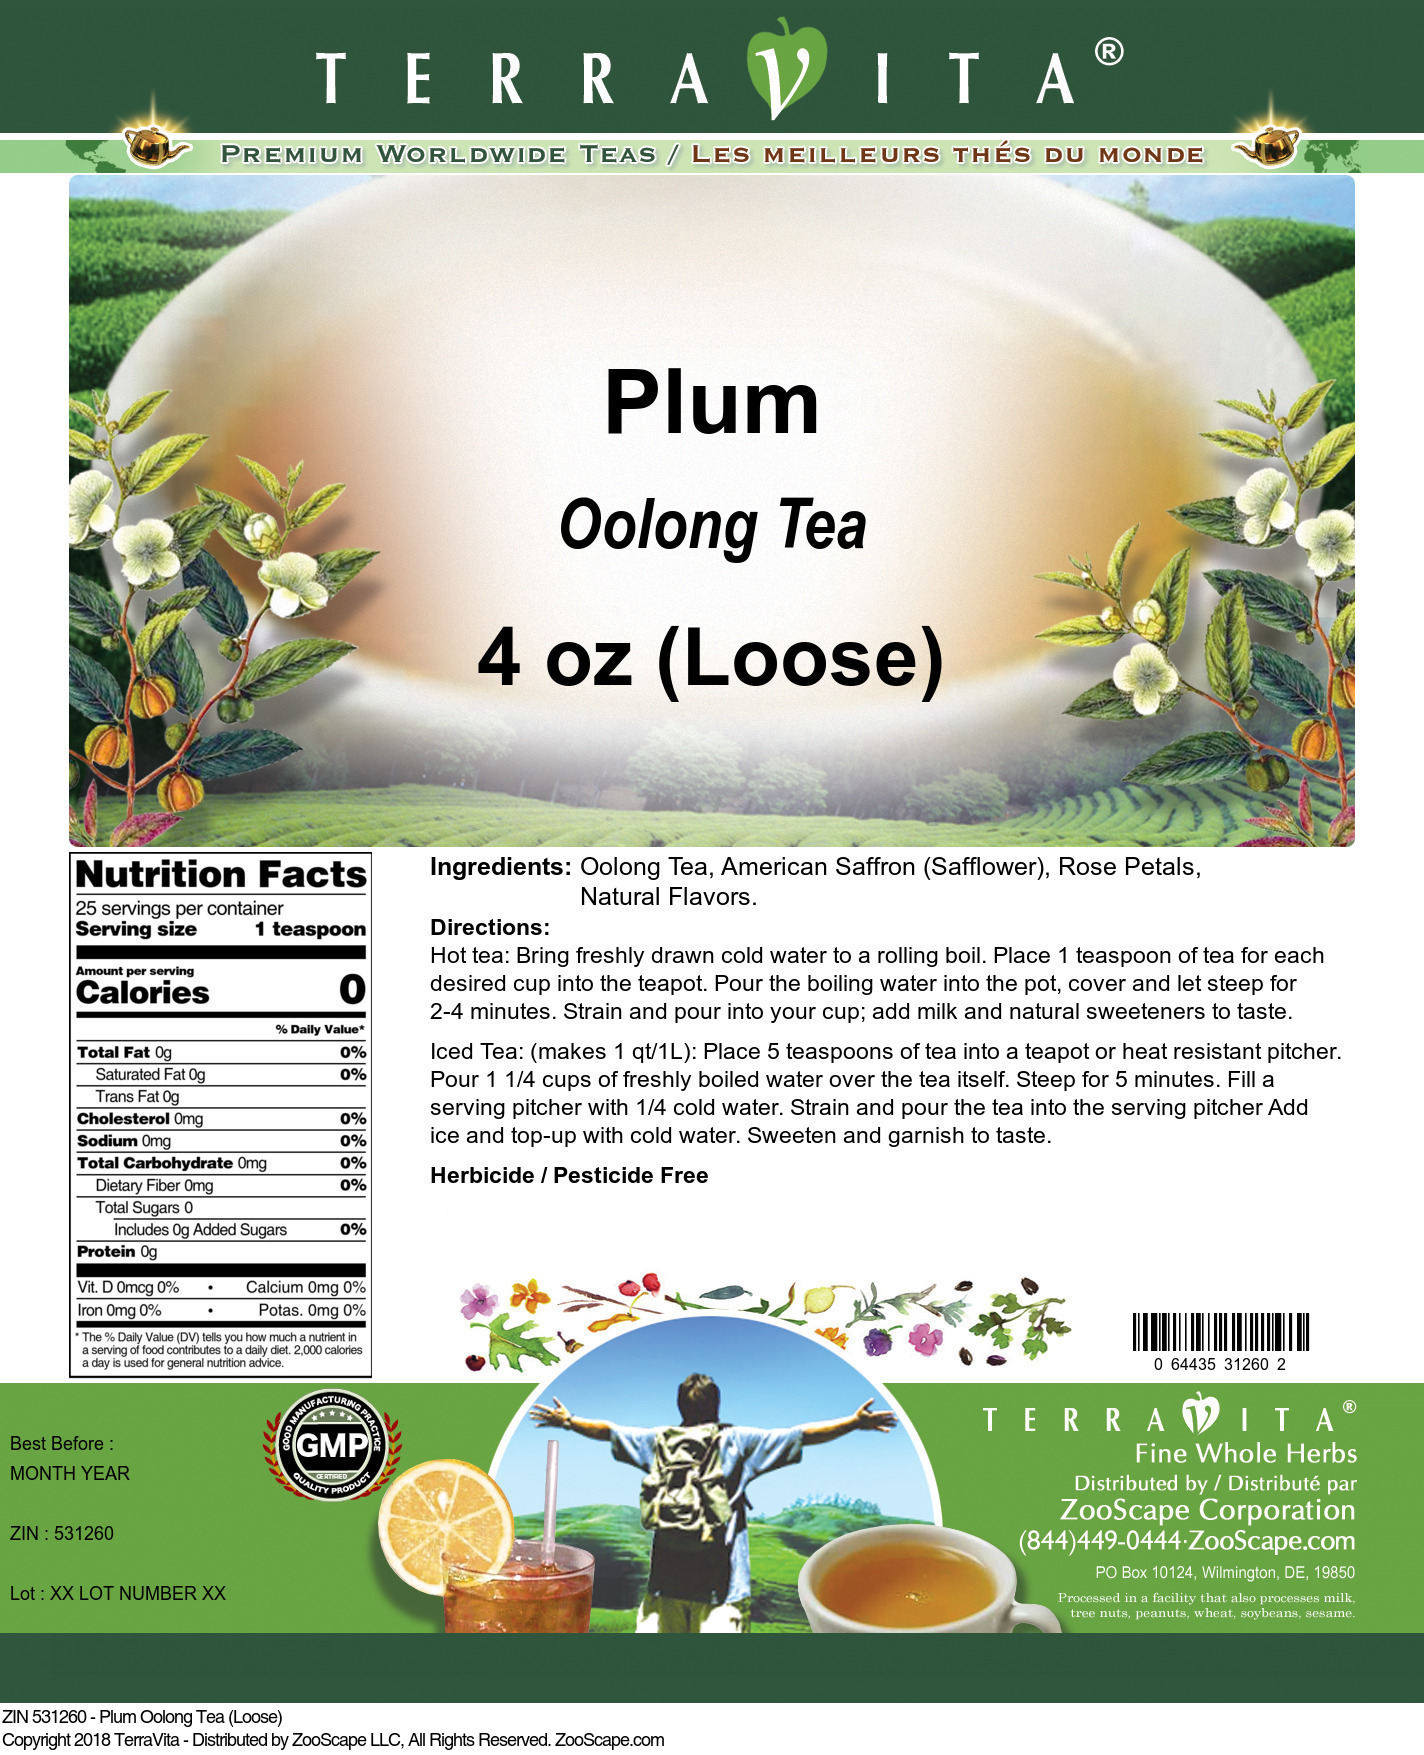 Plum Oolong Tea (Loose) - Label